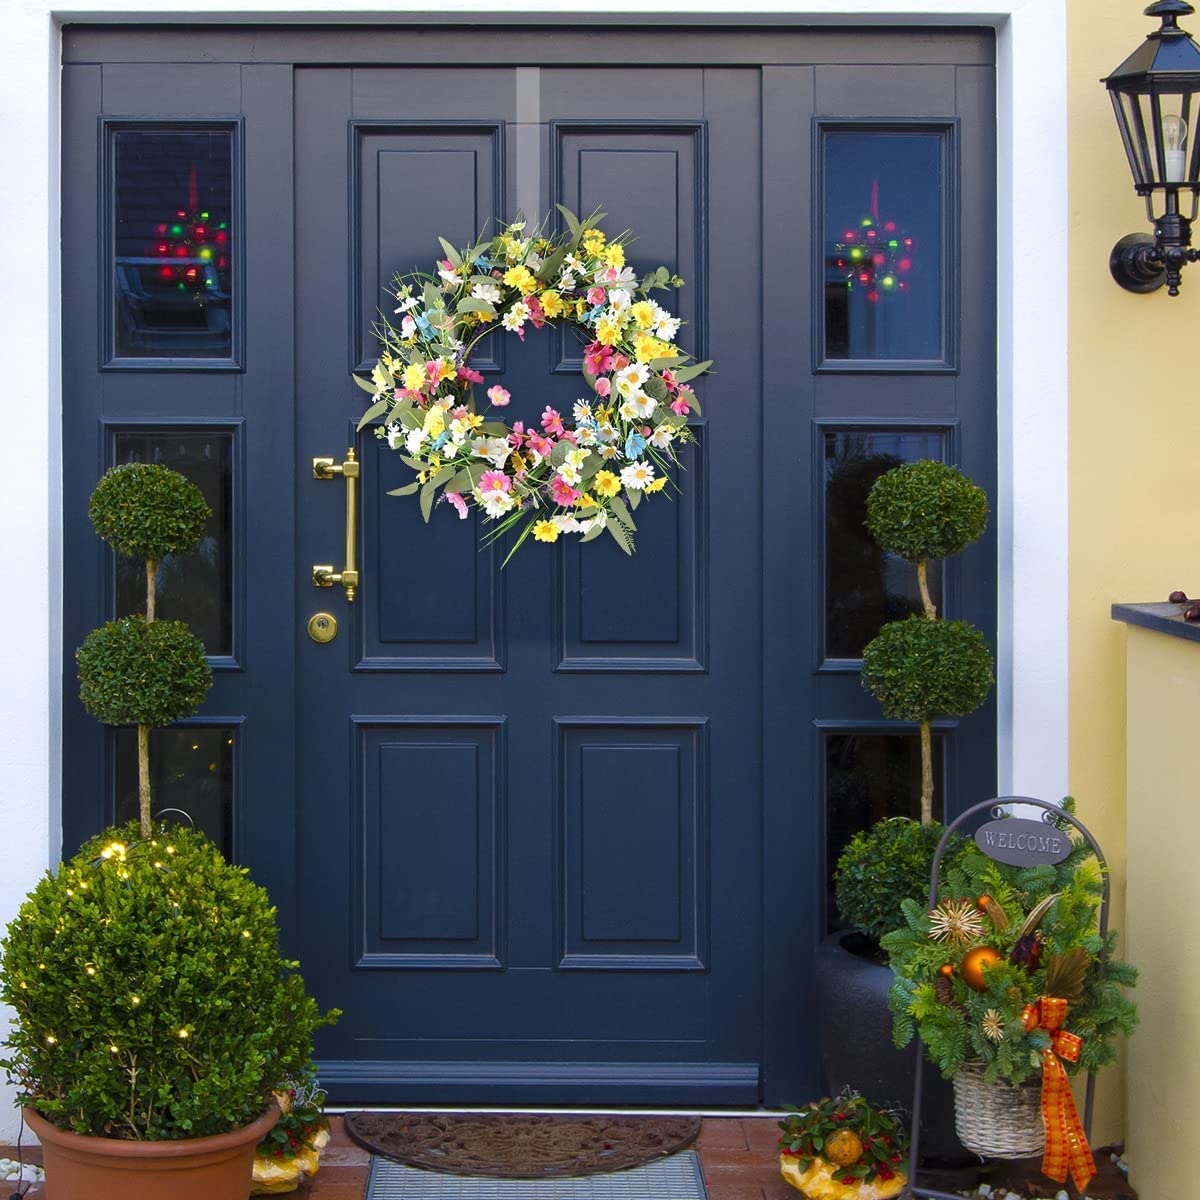 Wreath Hanger,12” Clear Wreath Hooks for Front Door,2 Pack Over The Door Christmas Easter Decoration Hang Fall Halloween Wreaths Holder